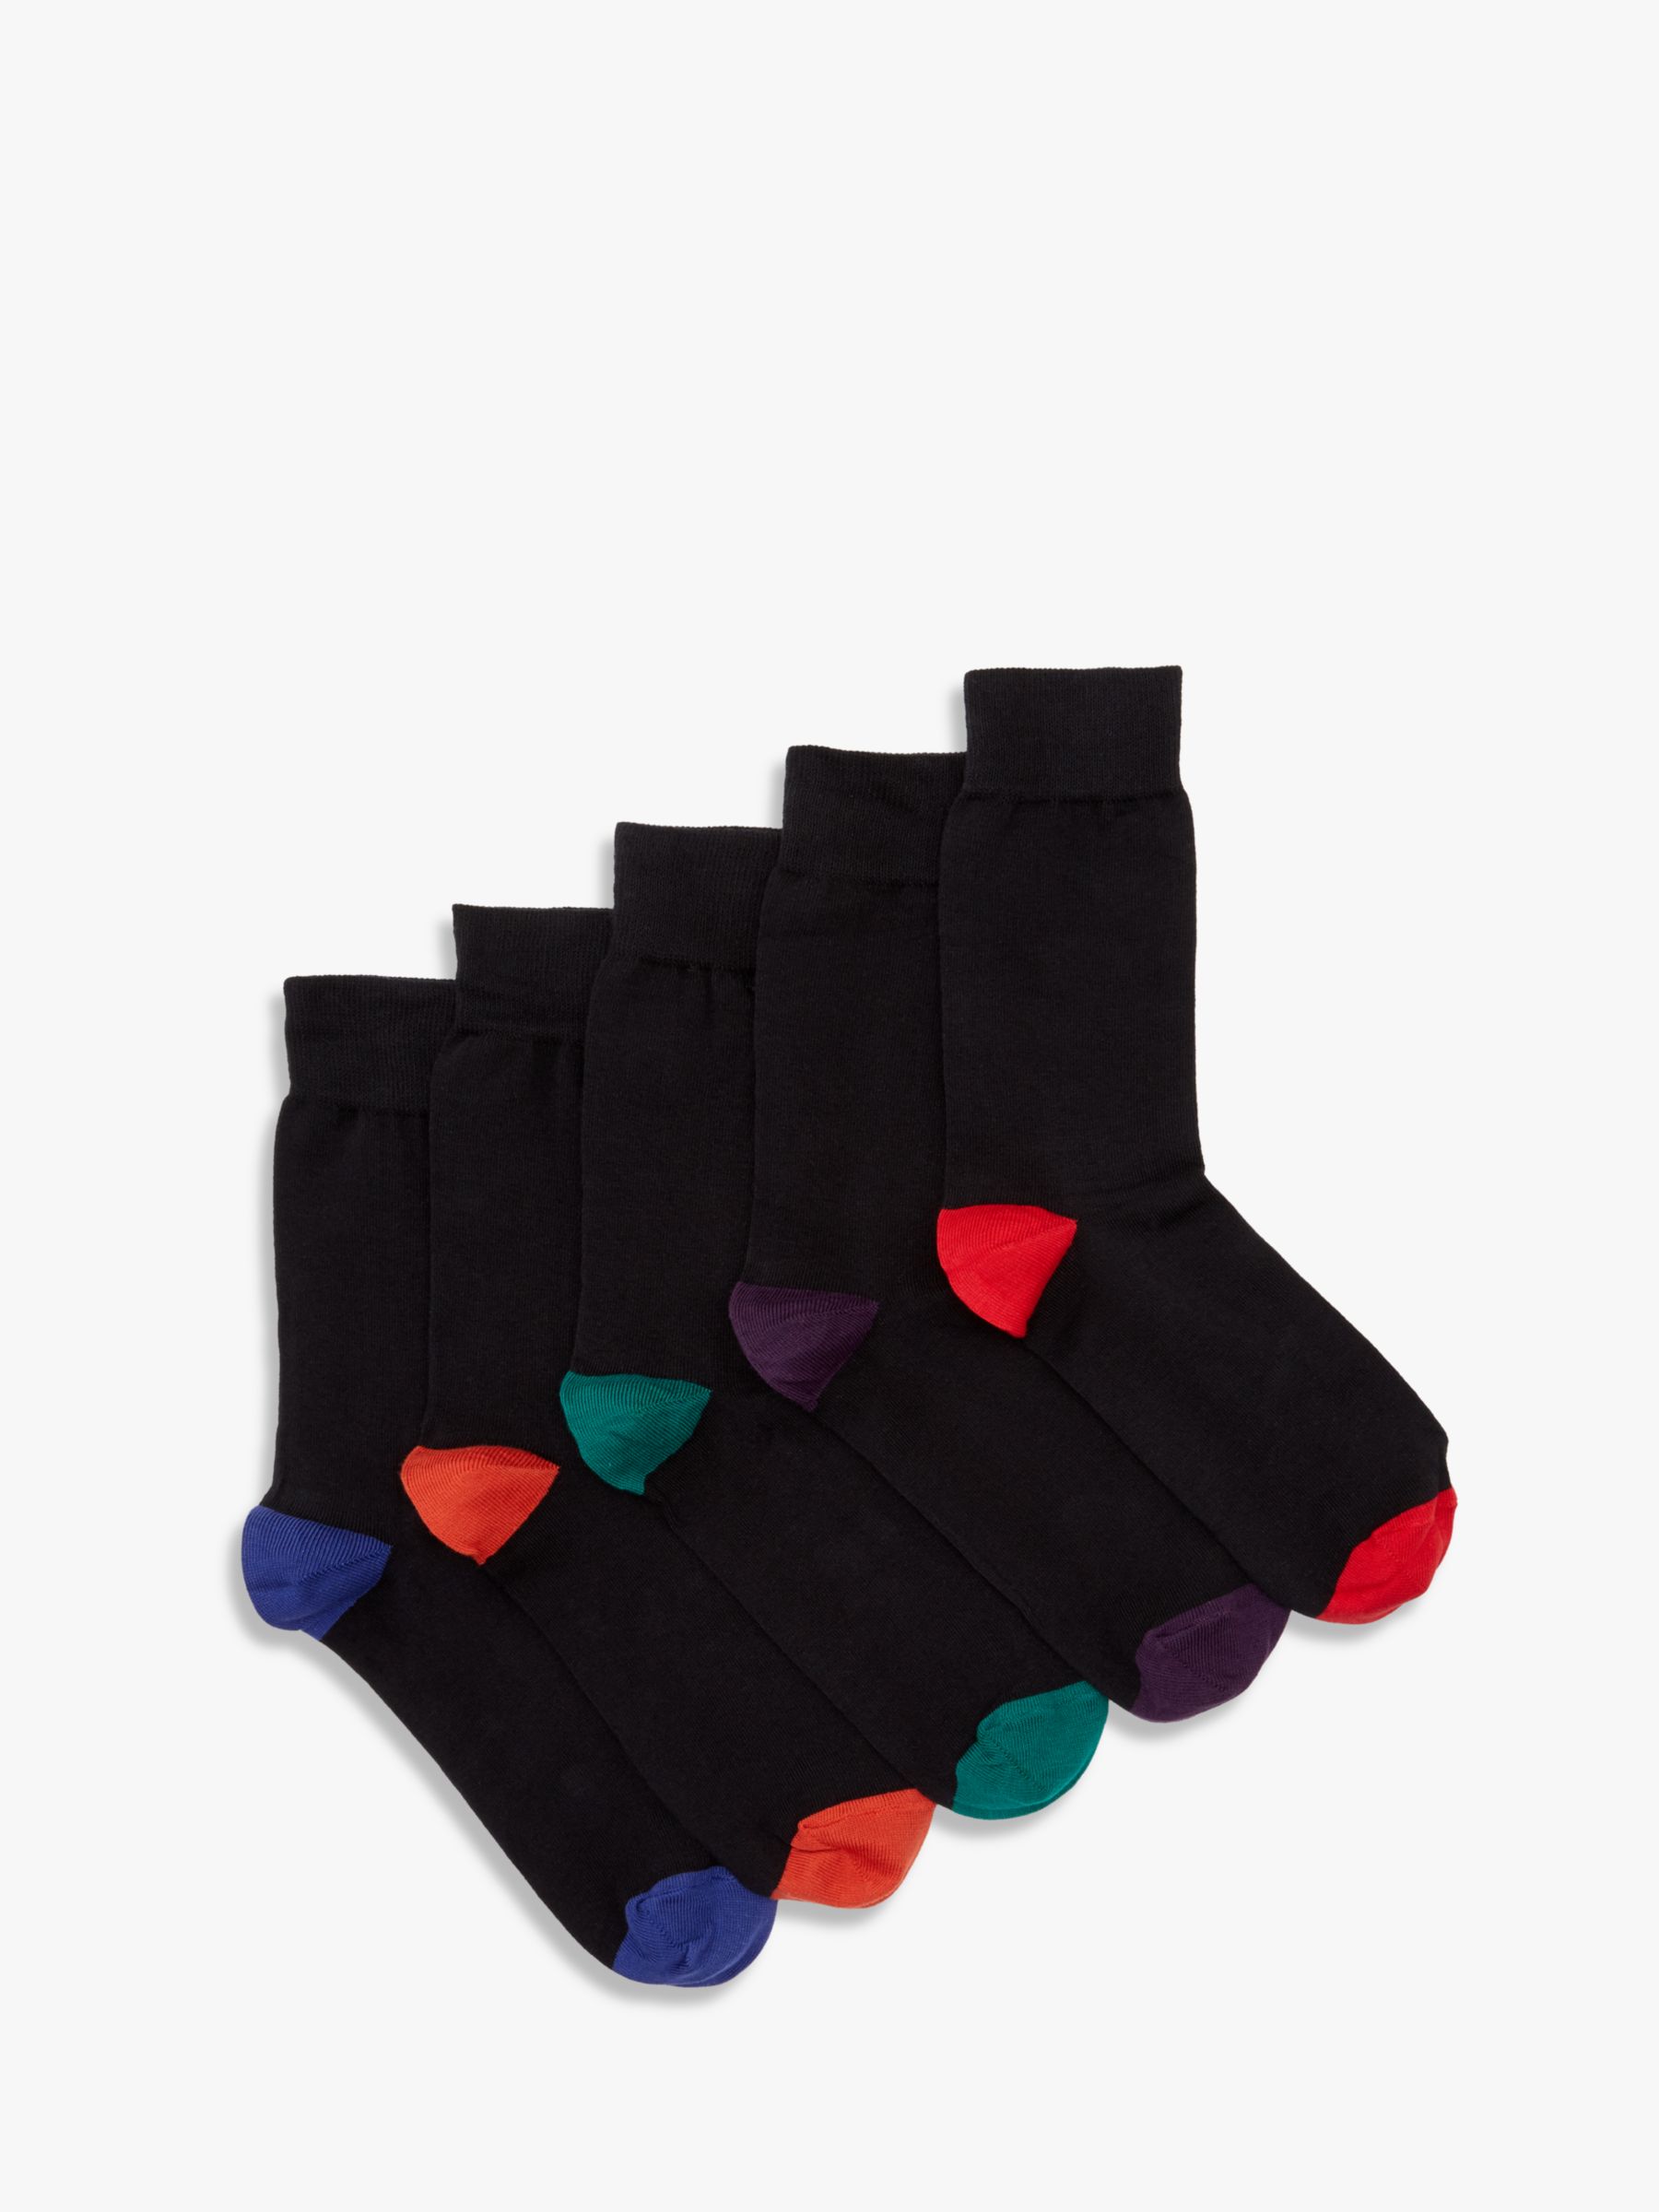 John Lewis & Partners Heel and Toe Socks, Pack of 5, Black, L